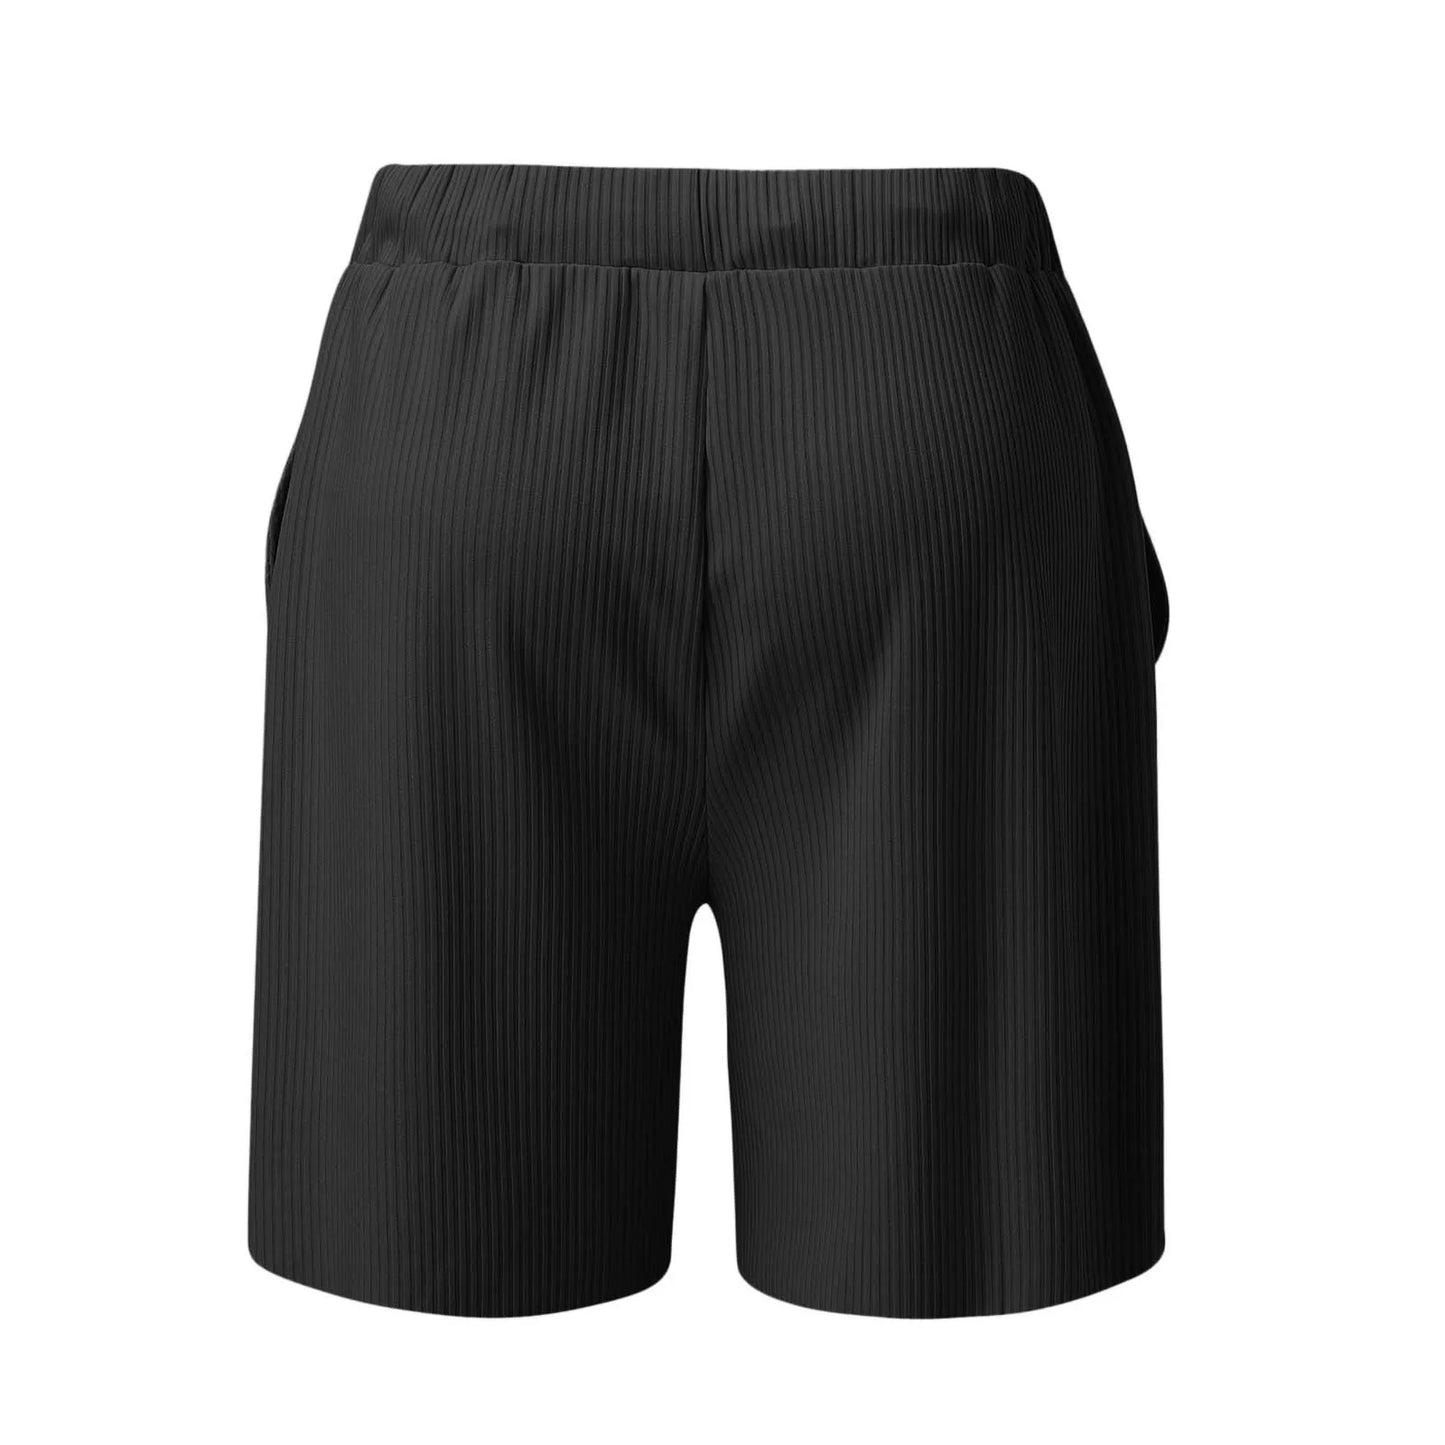 Men Tank Top Shorts Set Solid Black/Sleeveless Shirts Gym Bottoms Male Tracksuit